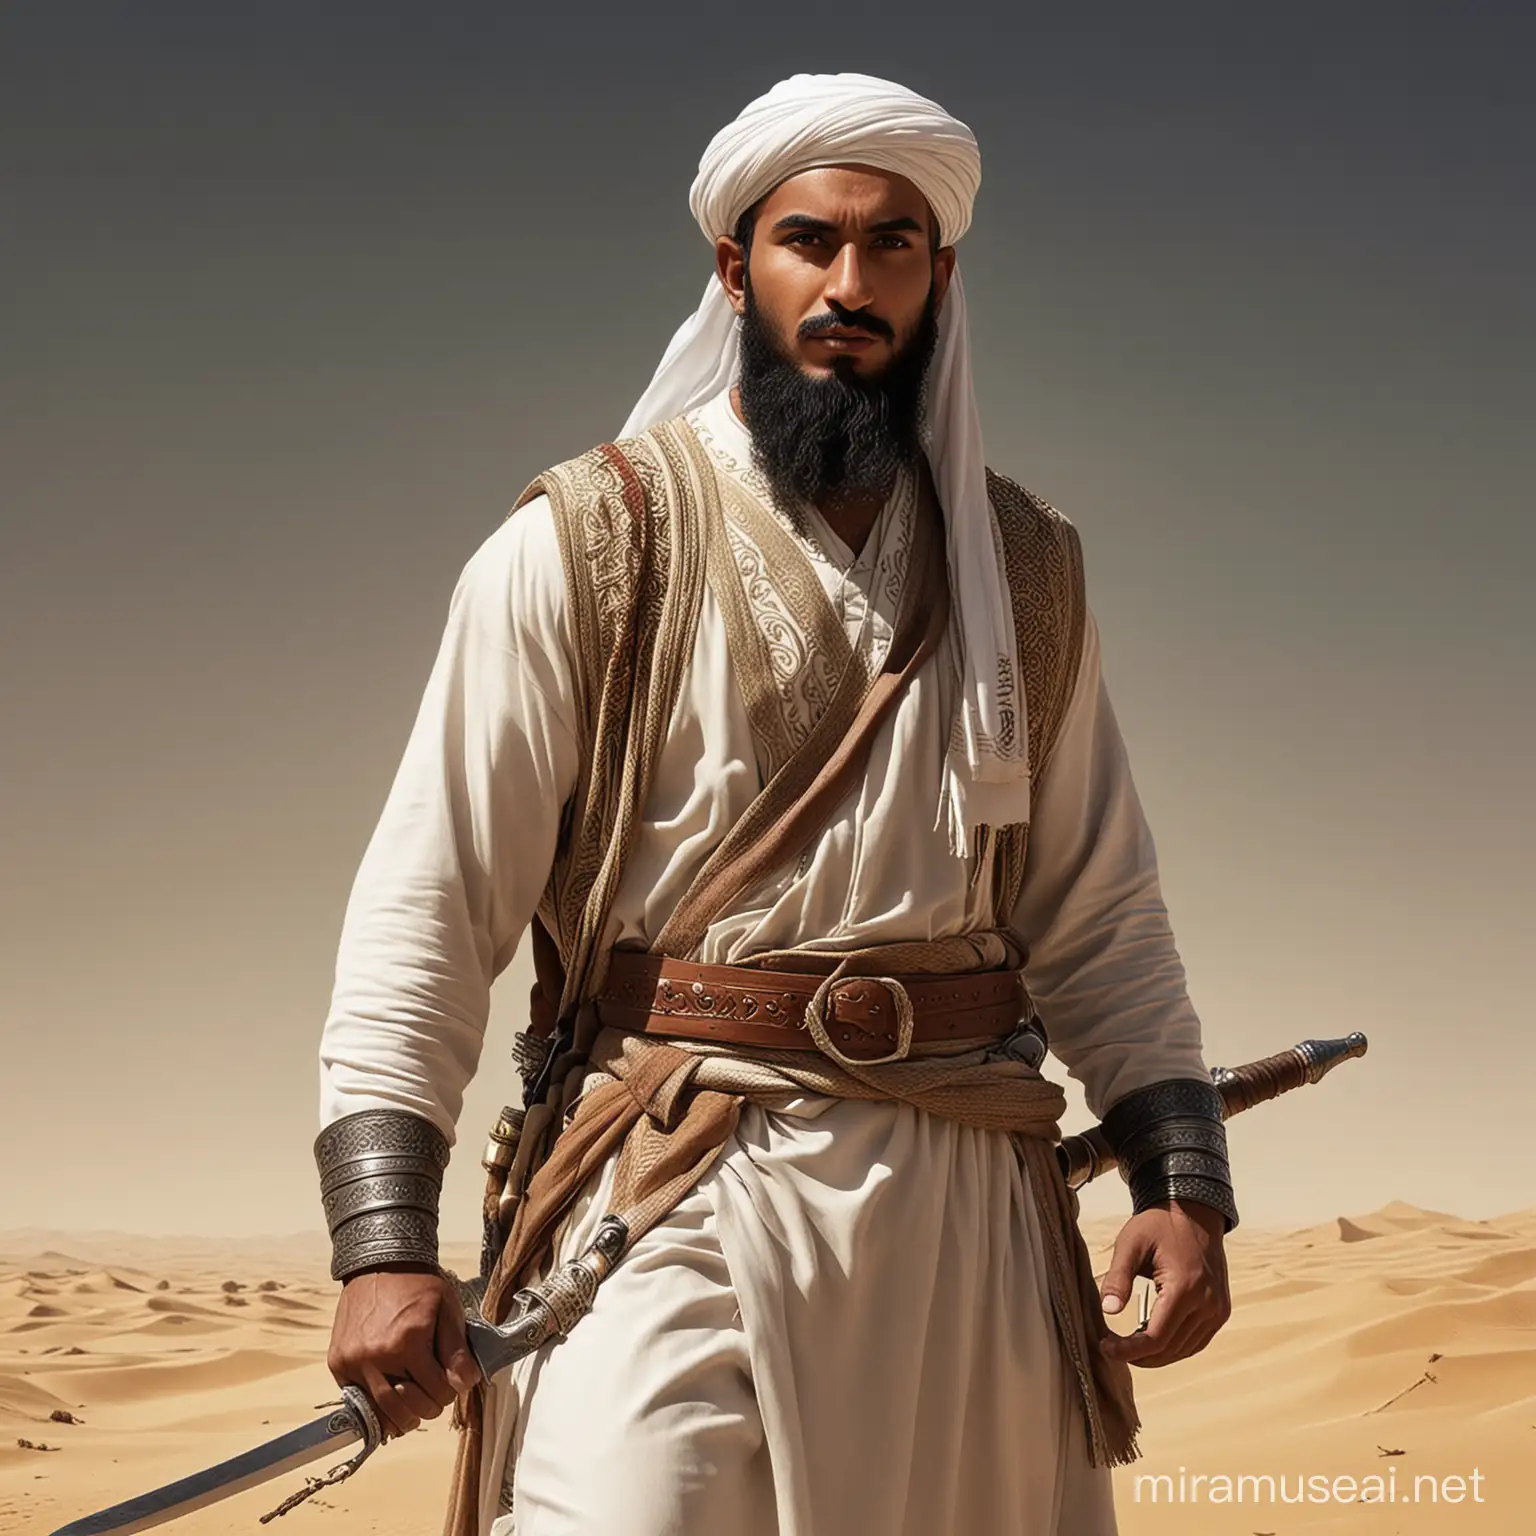 Muslim Warrior in Majestic Battle Pose